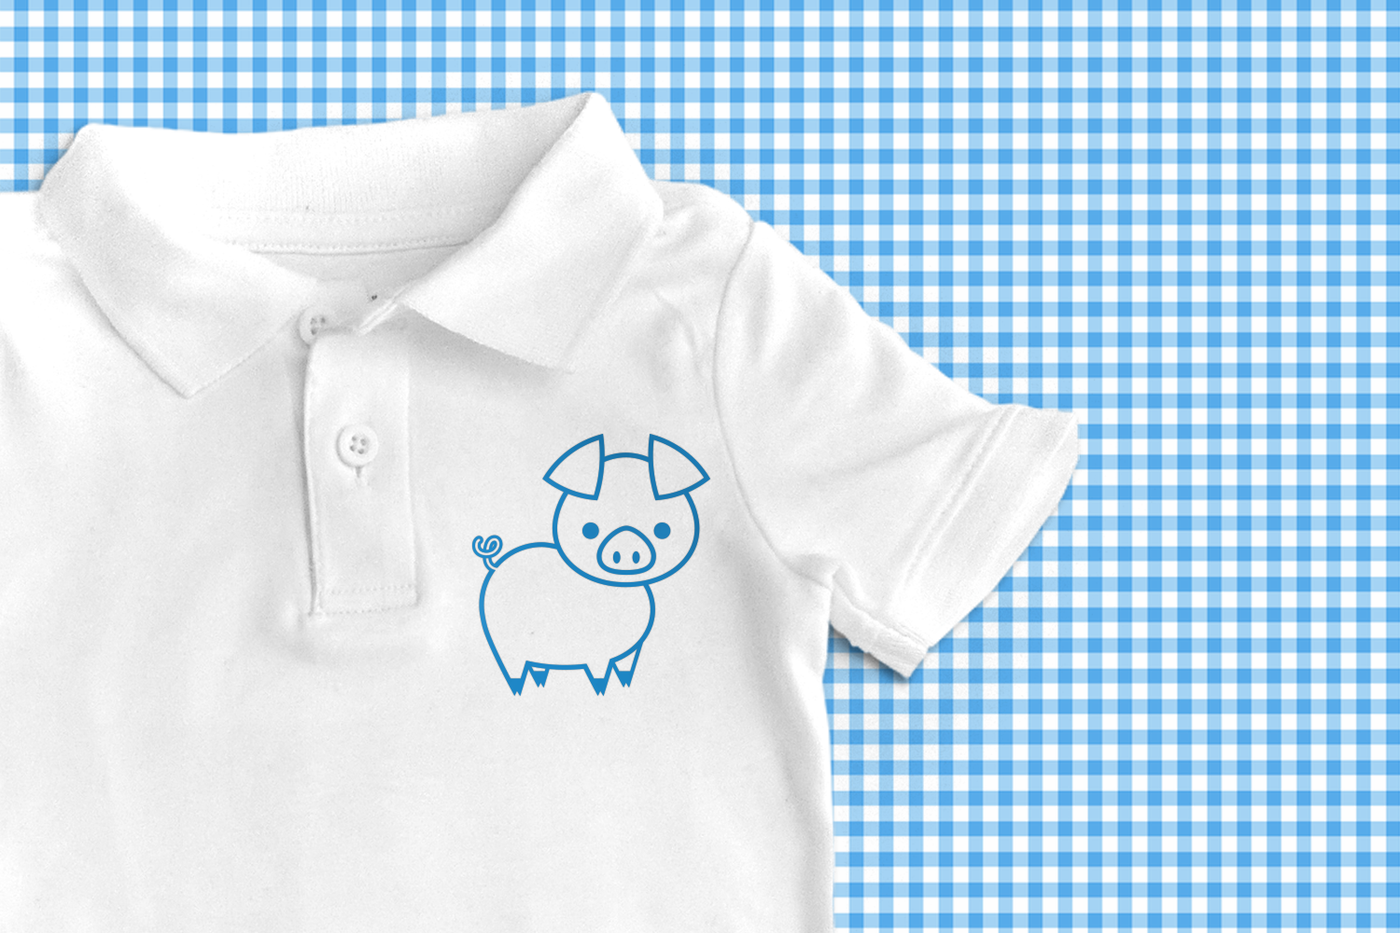 Pig design on a polo shirt as a single color